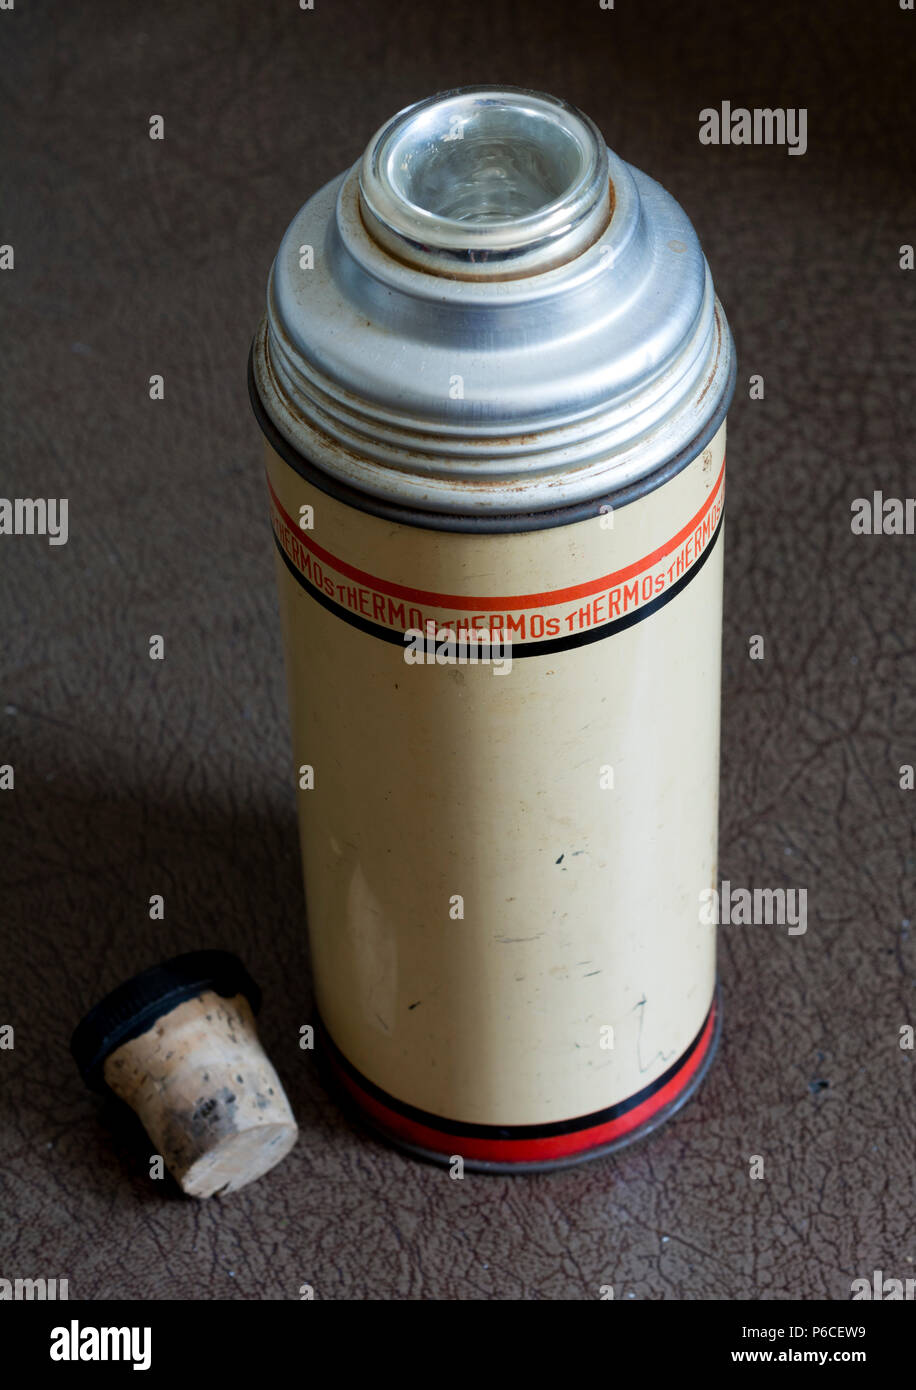 https://c8.alamy.com/comp/P6CEW9/old-thermos-flask-with-cork-P6CEW9.jpg